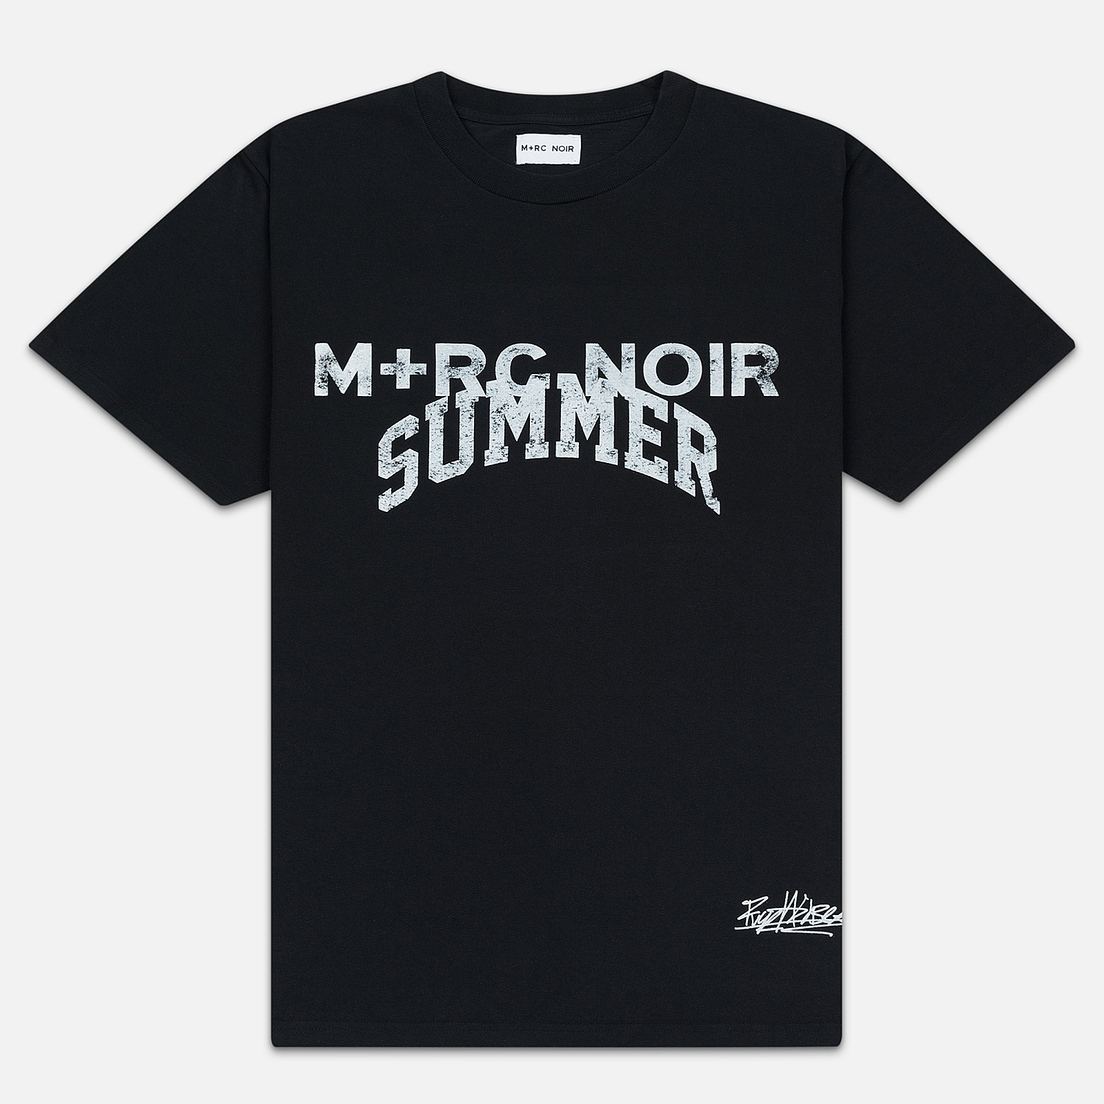 M+RC Noir Мужская футболка Summer Game